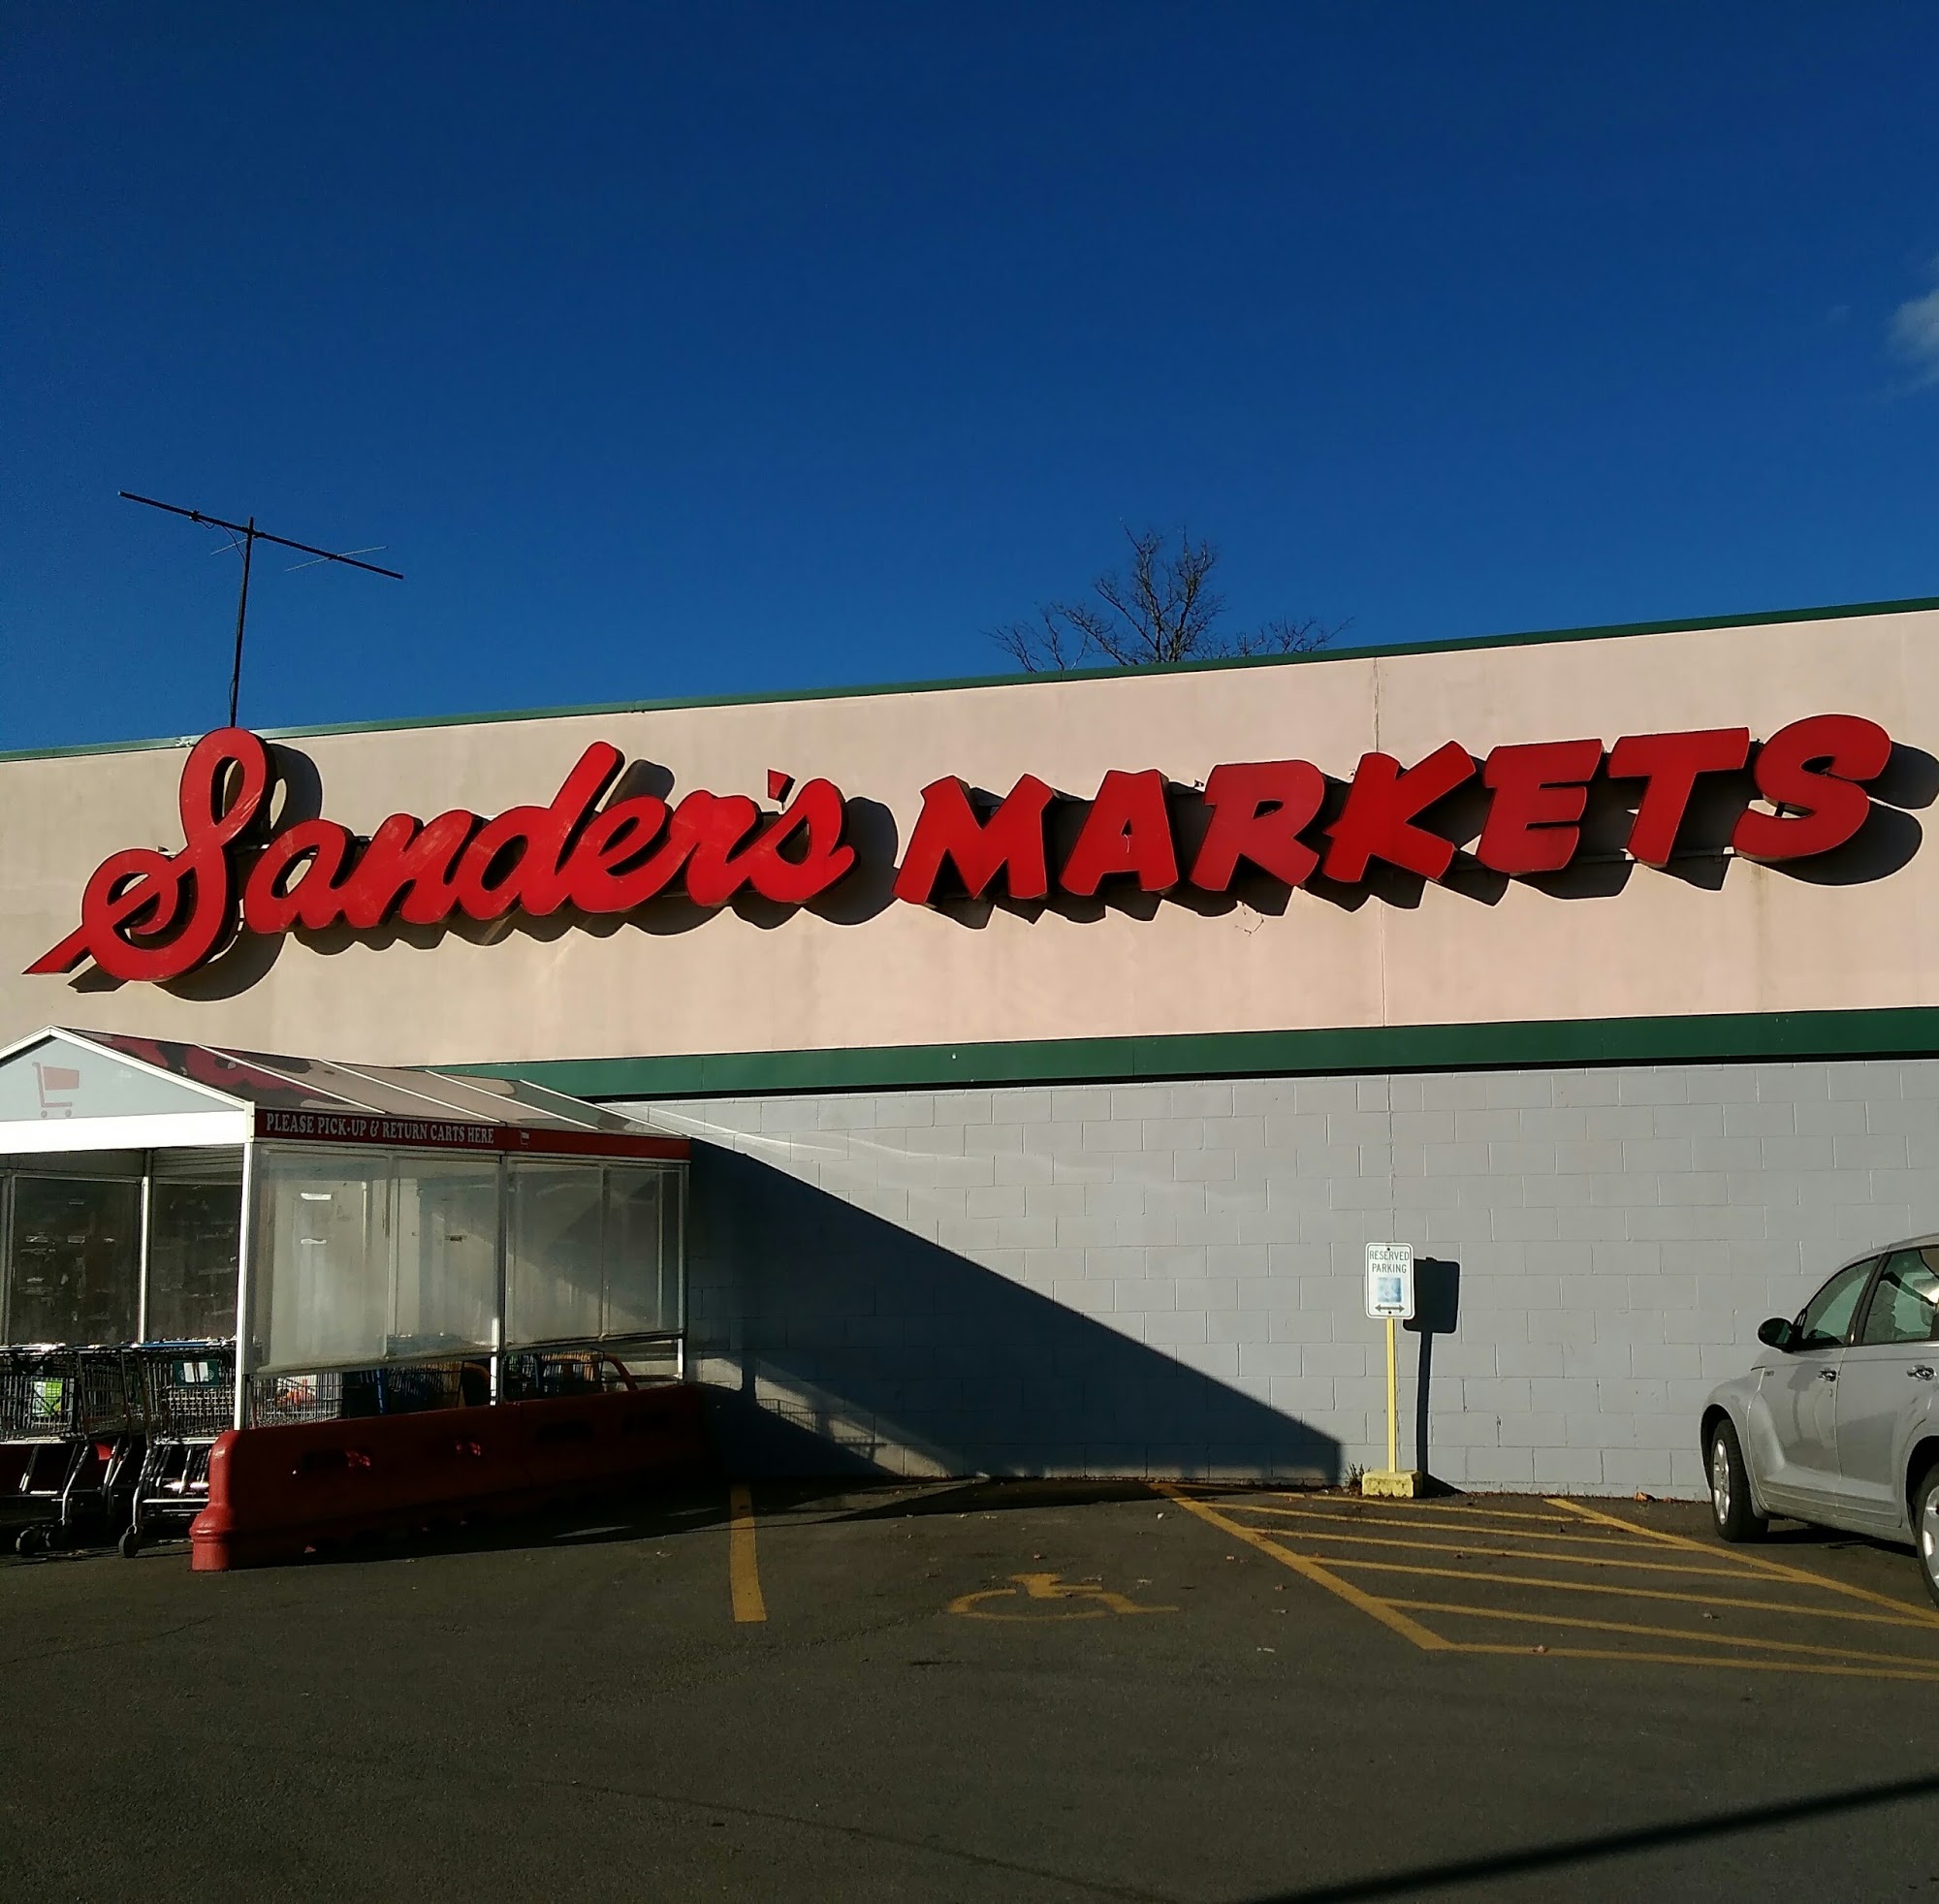 Sander's Markets